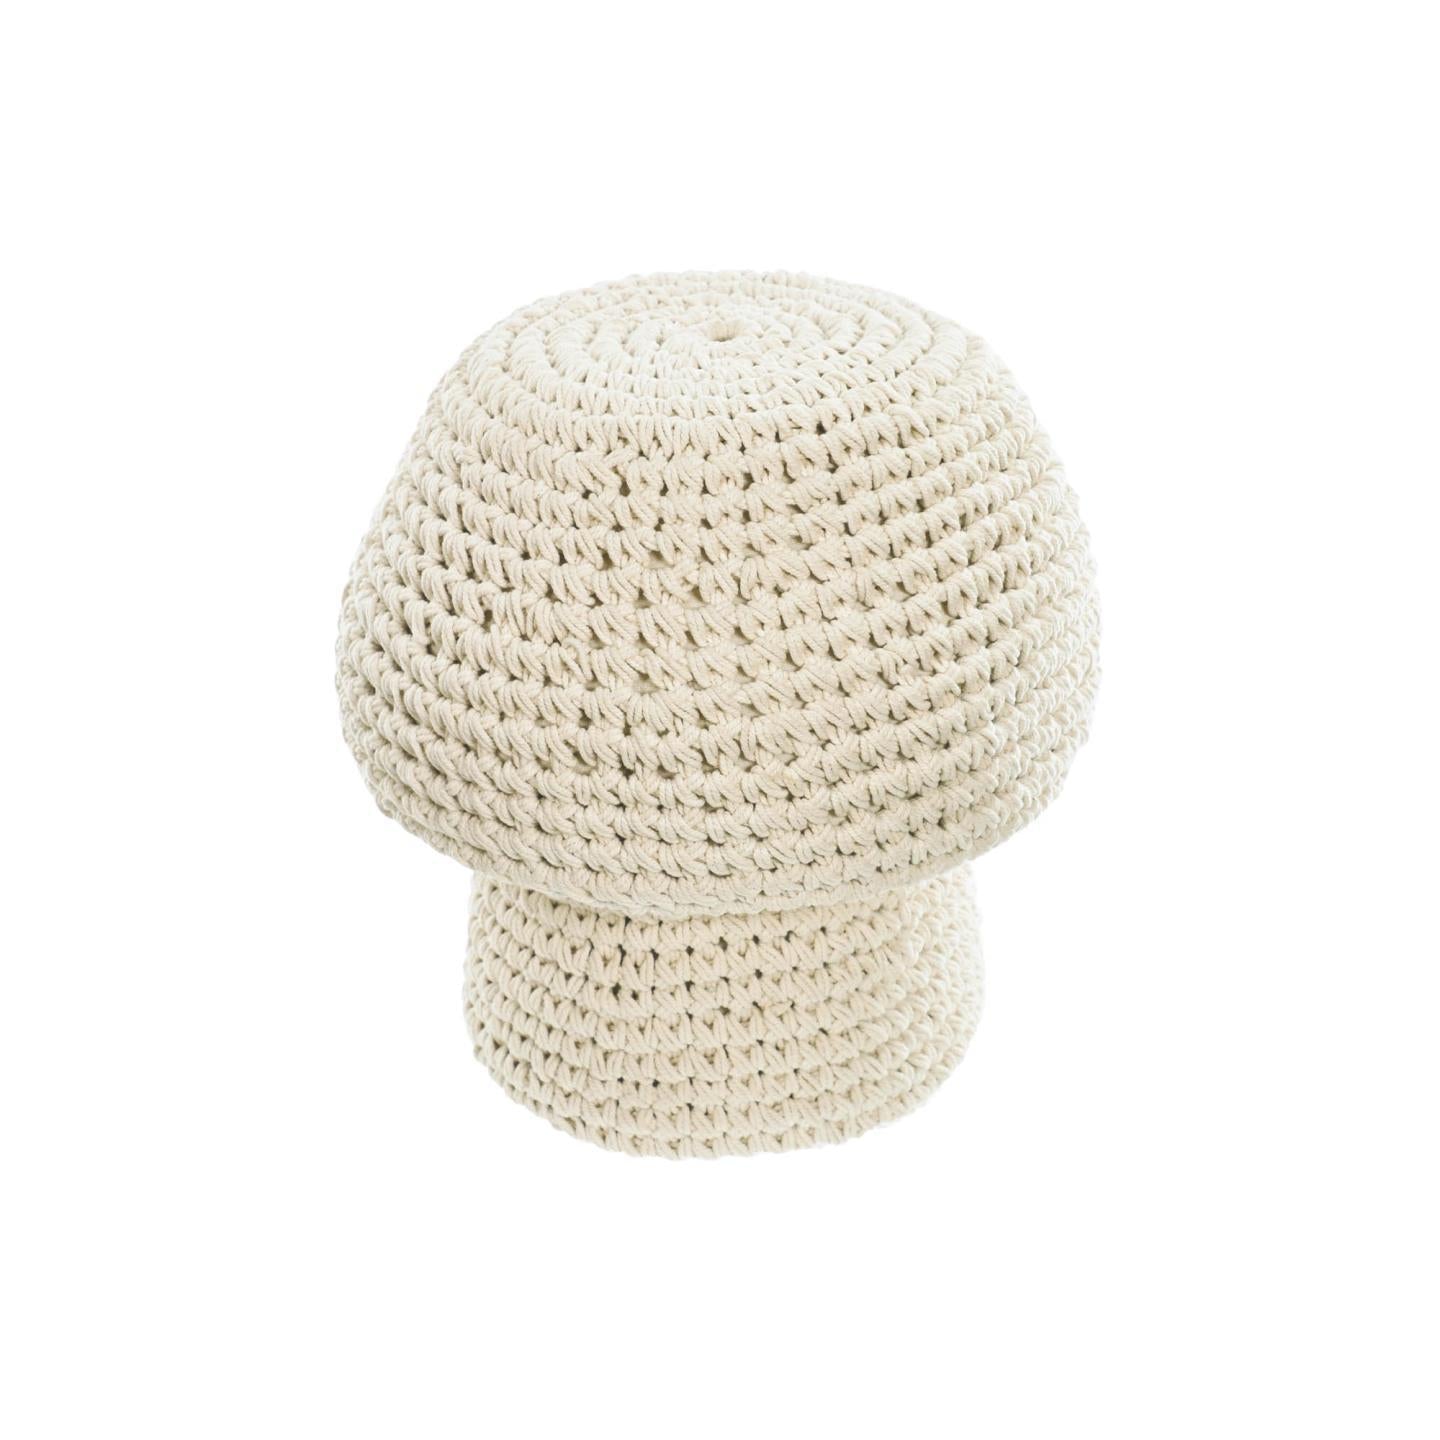 Enrica mushroom-shaped pouffe in white Ø 30 cm